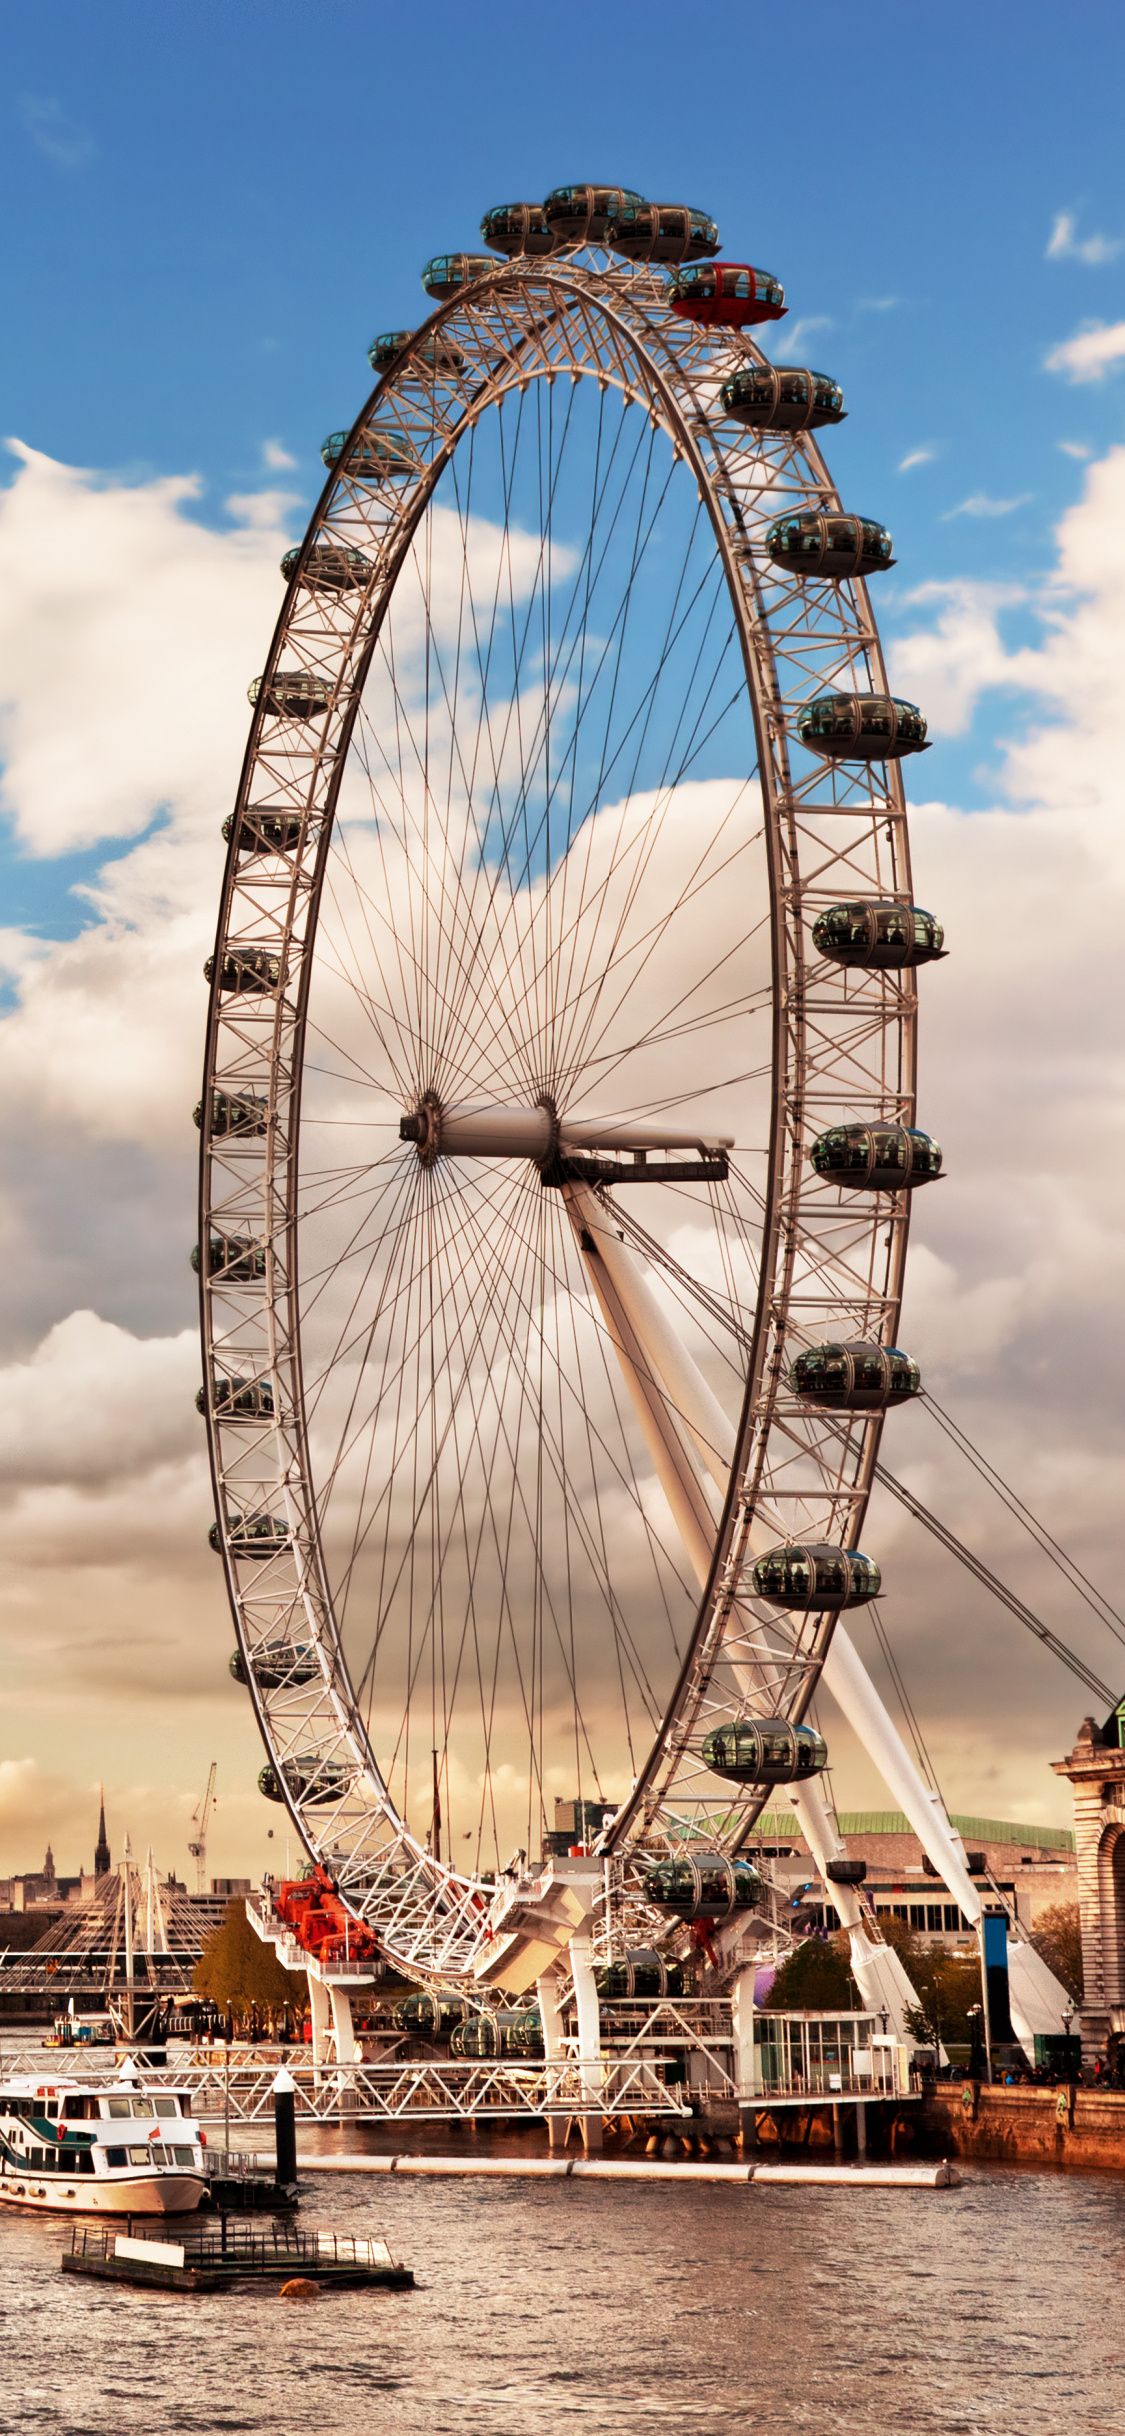 London Eye Colorful Ferris Wheel iPhone Wallpapers Free Download